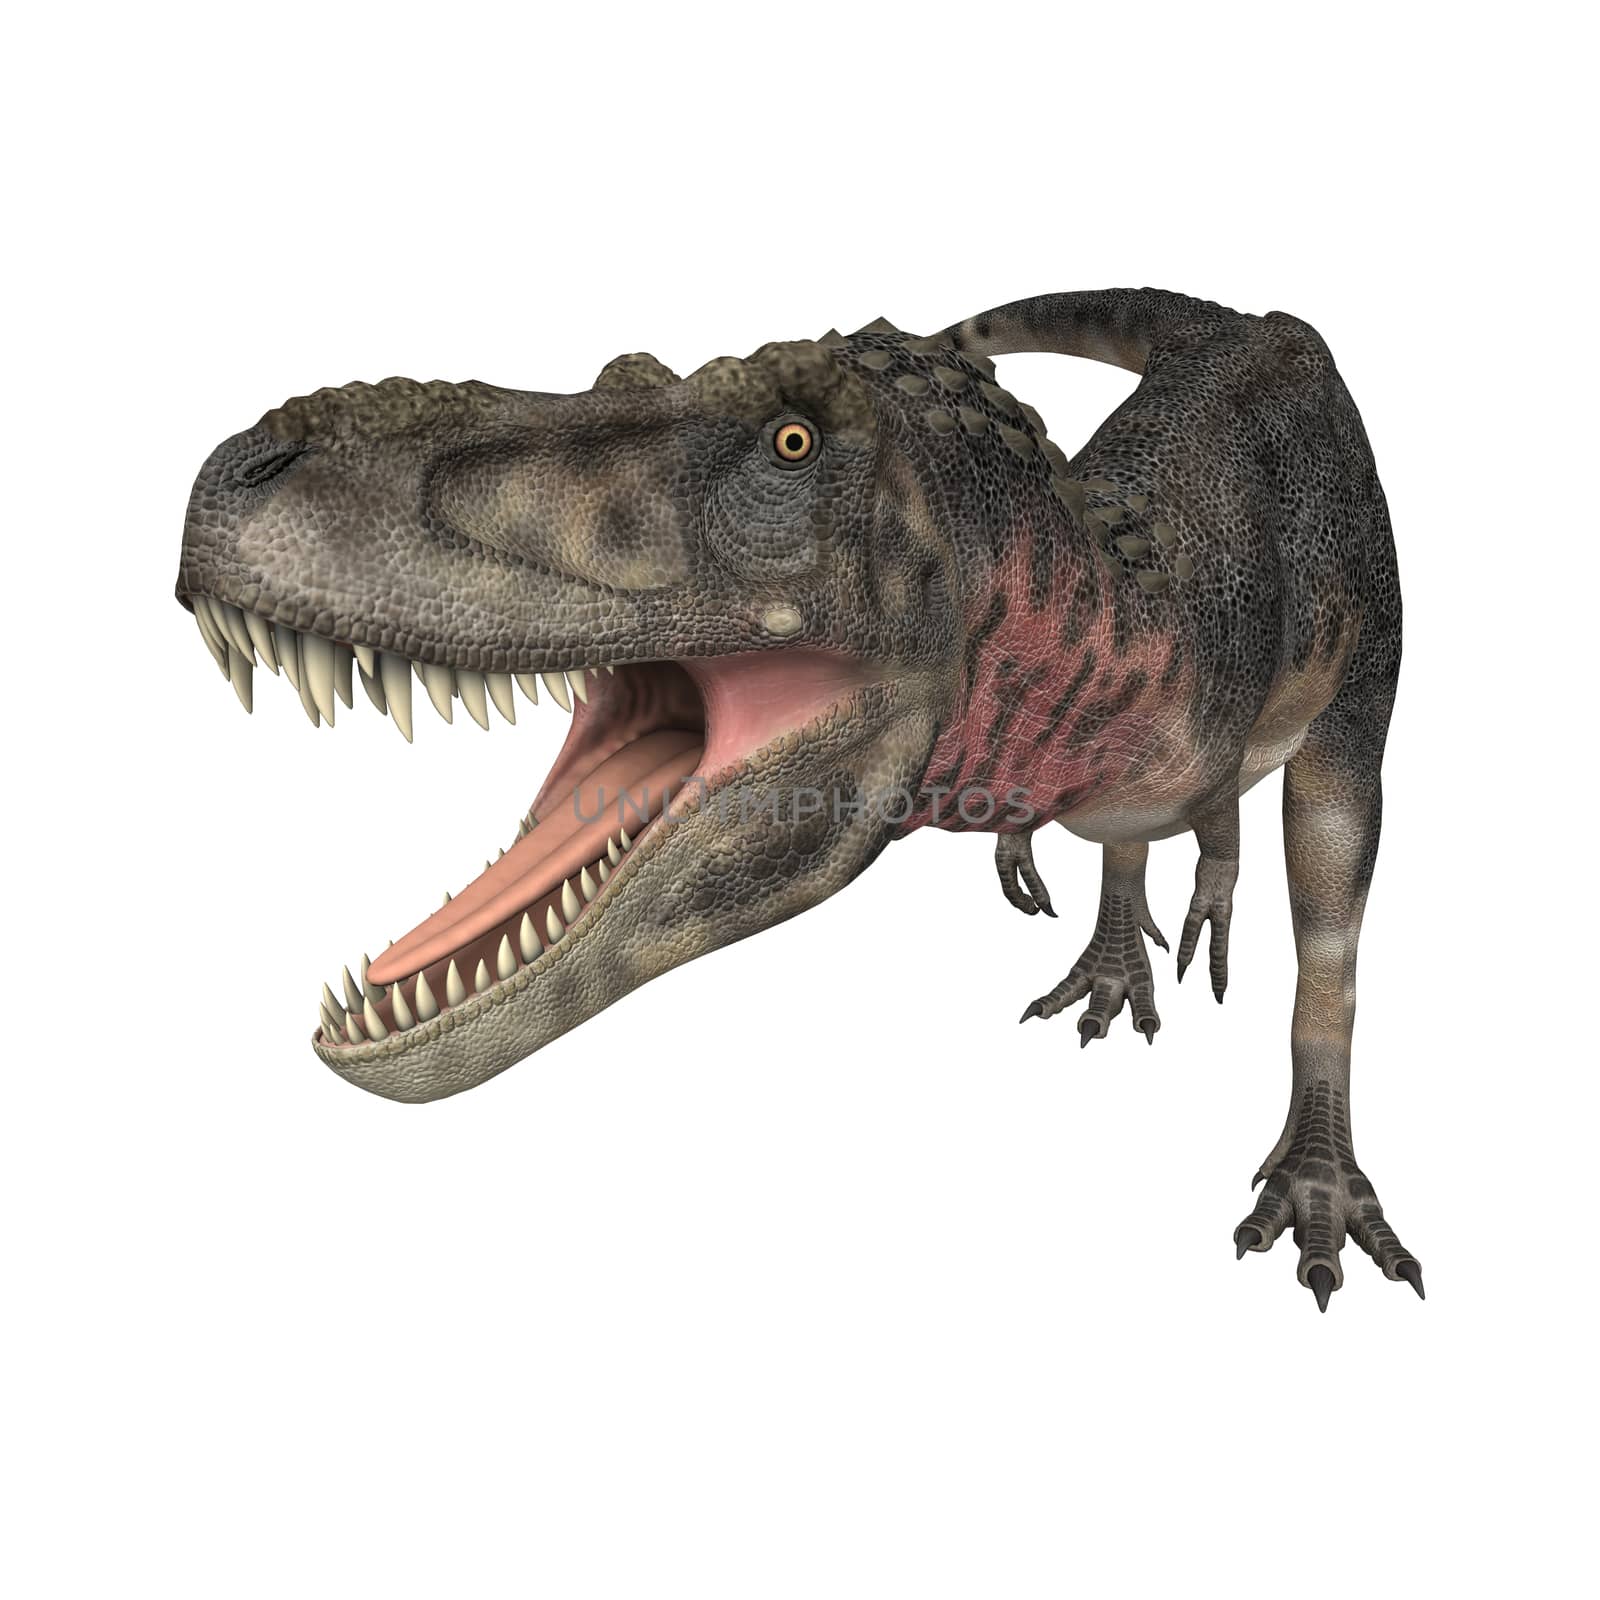 3D digital render of a dinosaur tarbosaurus isolated on white background